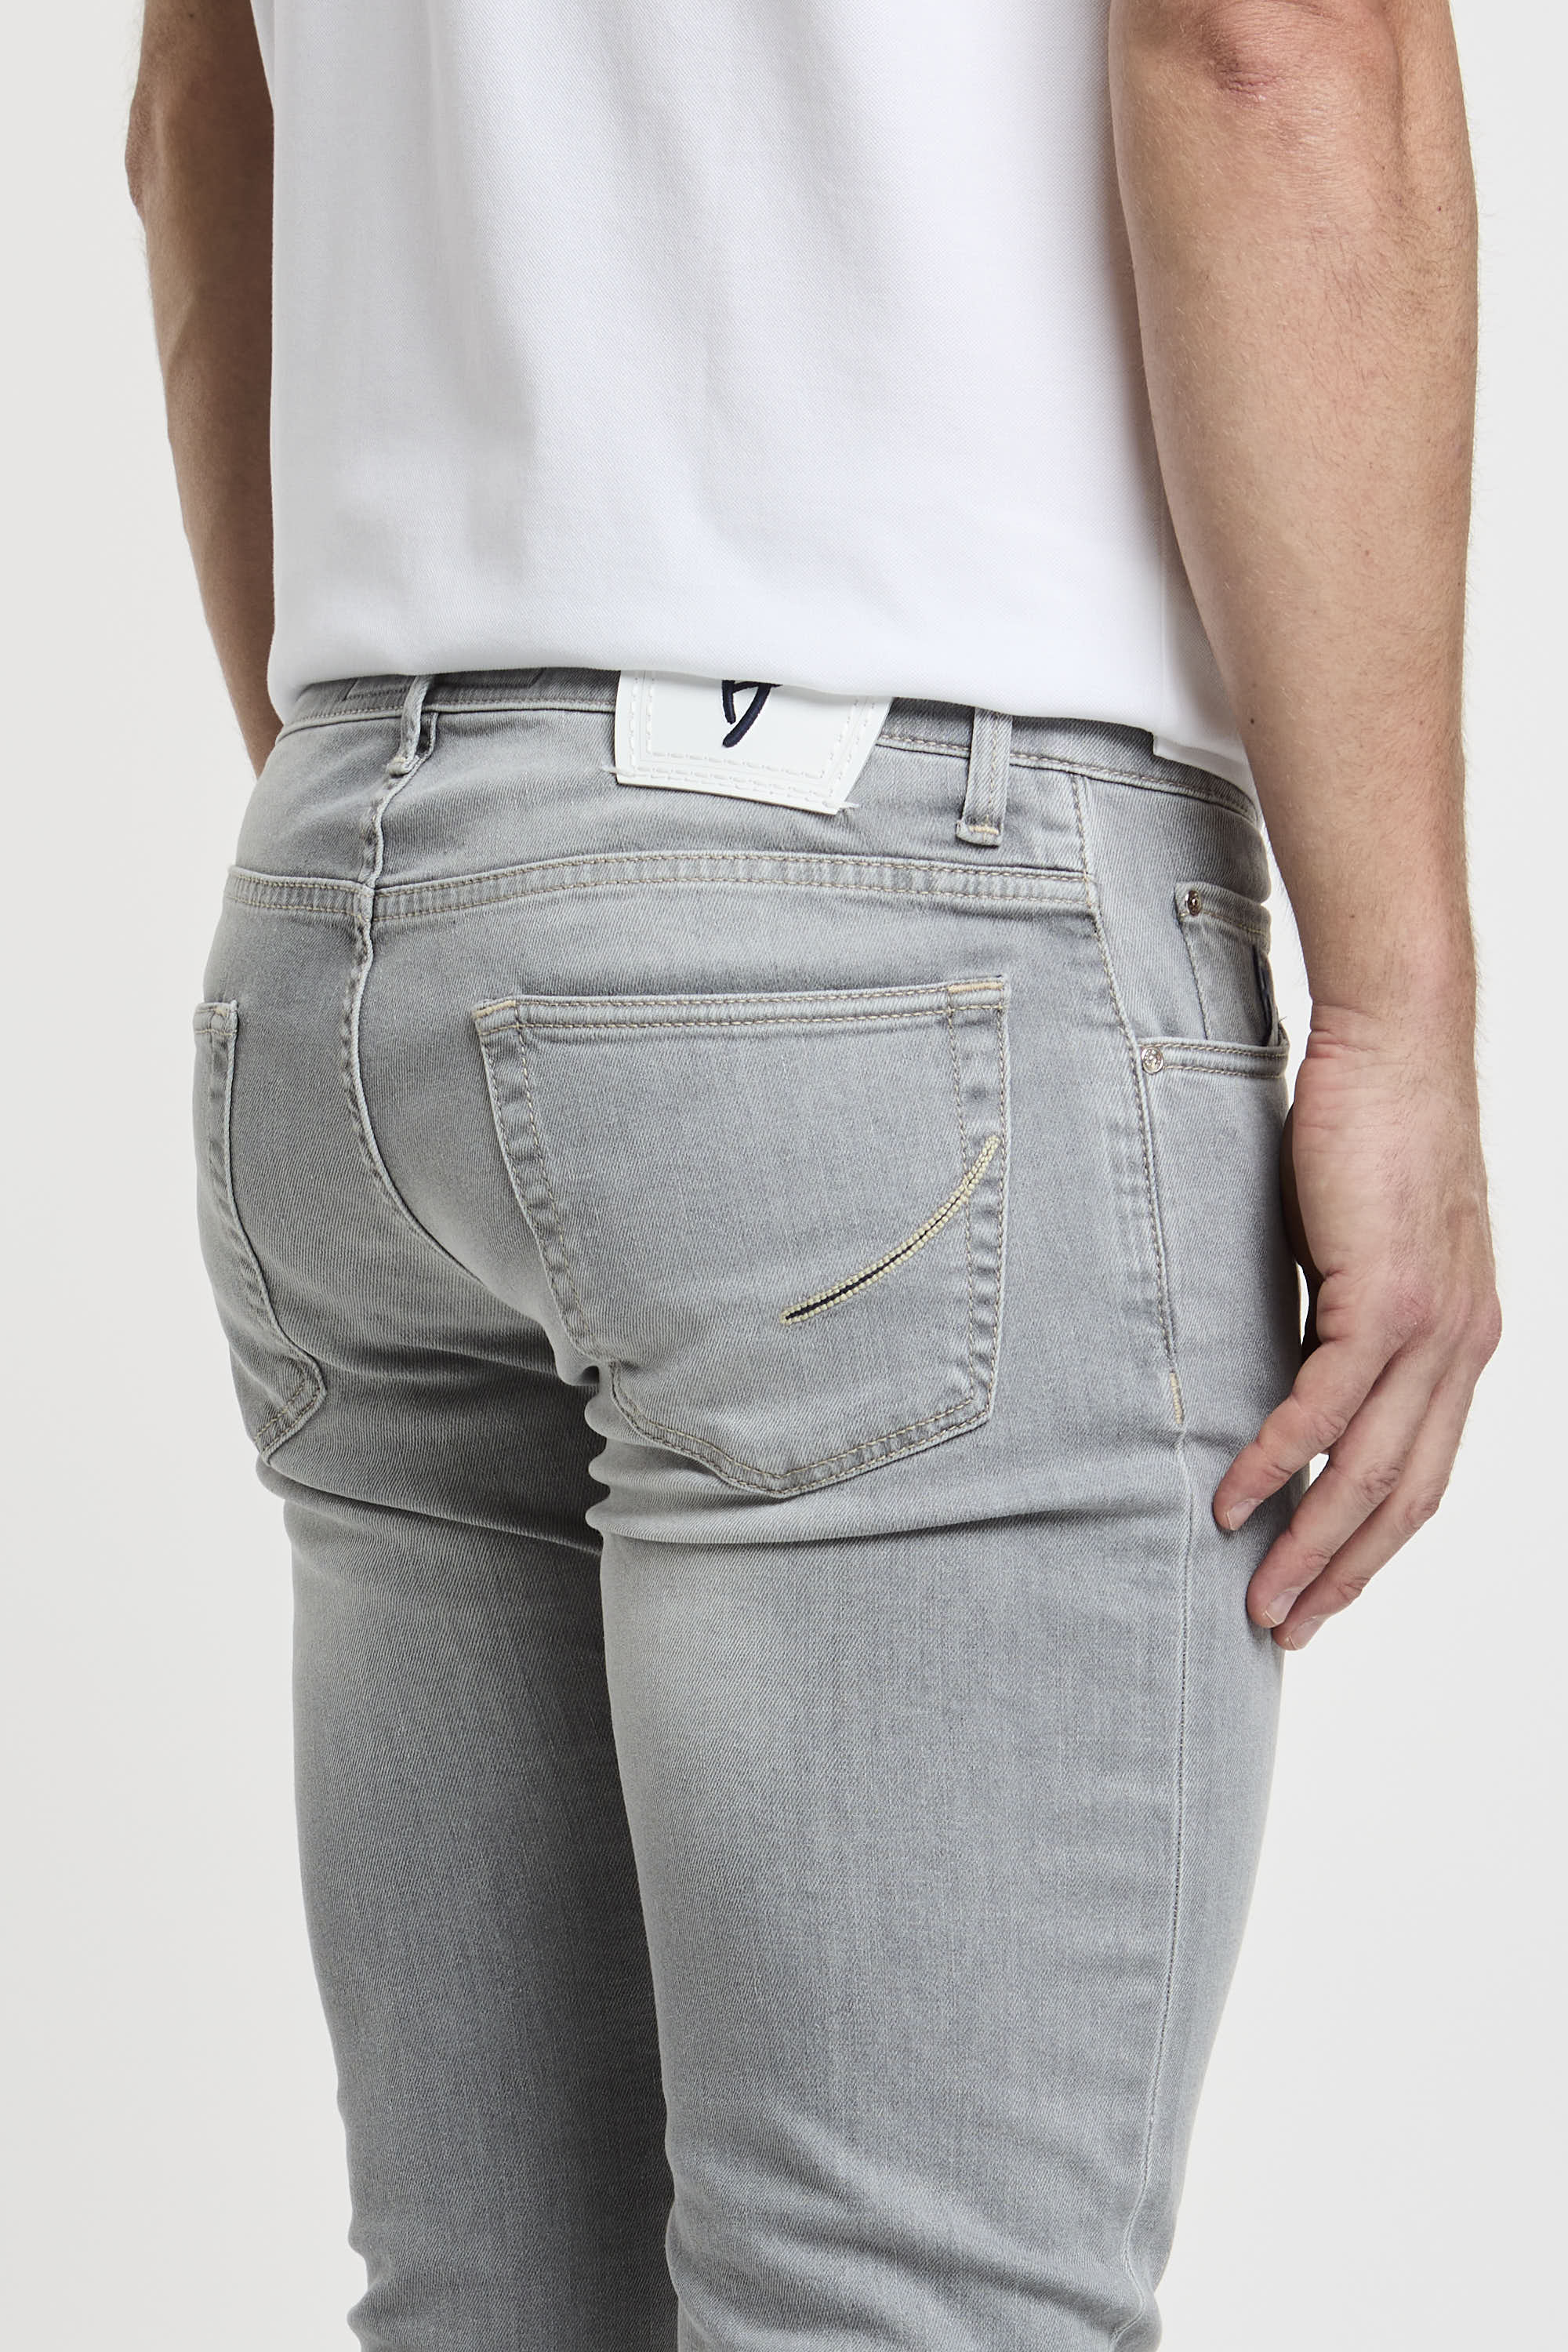 Handpicked Jeans Orvieto Cotton Grey-6